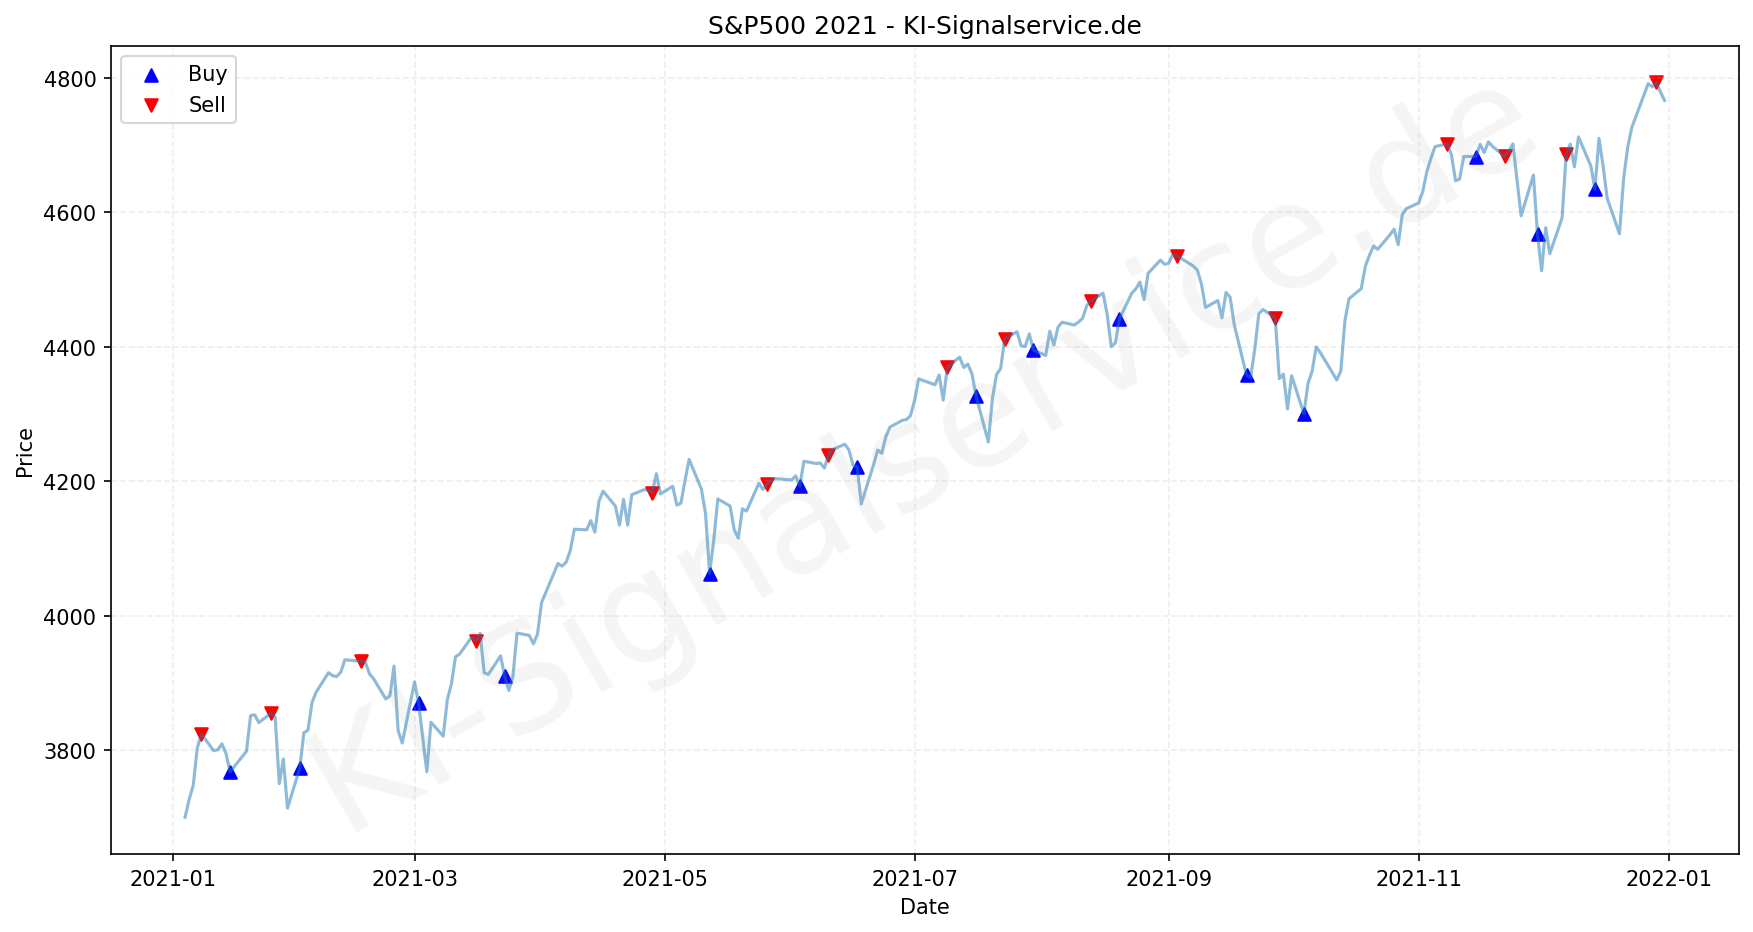 SP500 Index Performance Chart - KI Tradingsignale 2021